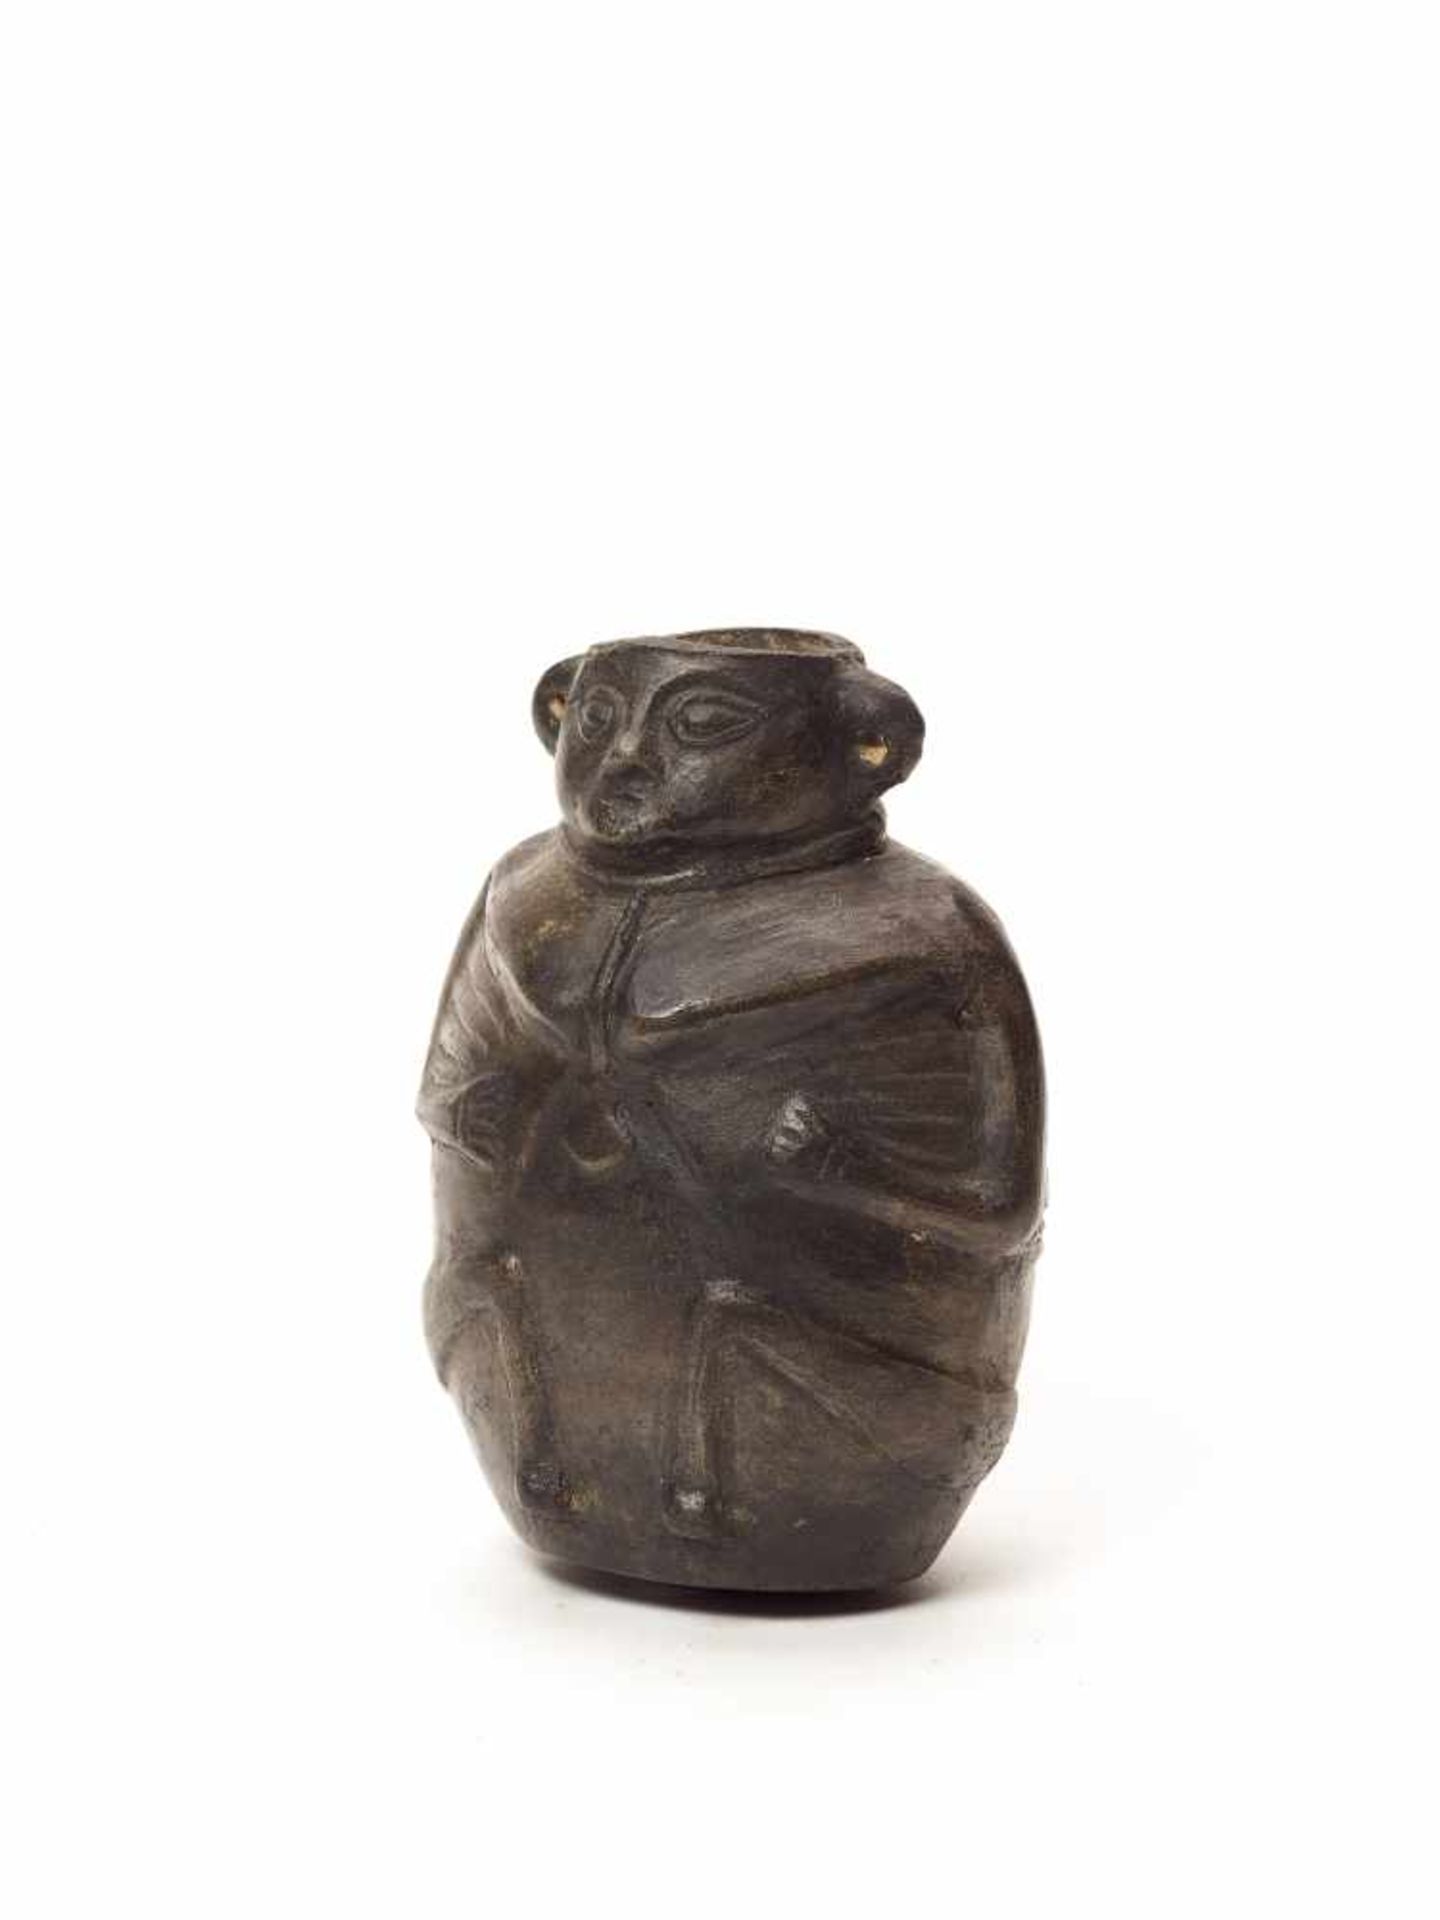 MAN-SHAPED VESSEL - VICÚS CULTURE, PERU, C. 100 BC-600 ADBlack fired clayVicús culture, Peru, c. 100 - Image 3 of 5